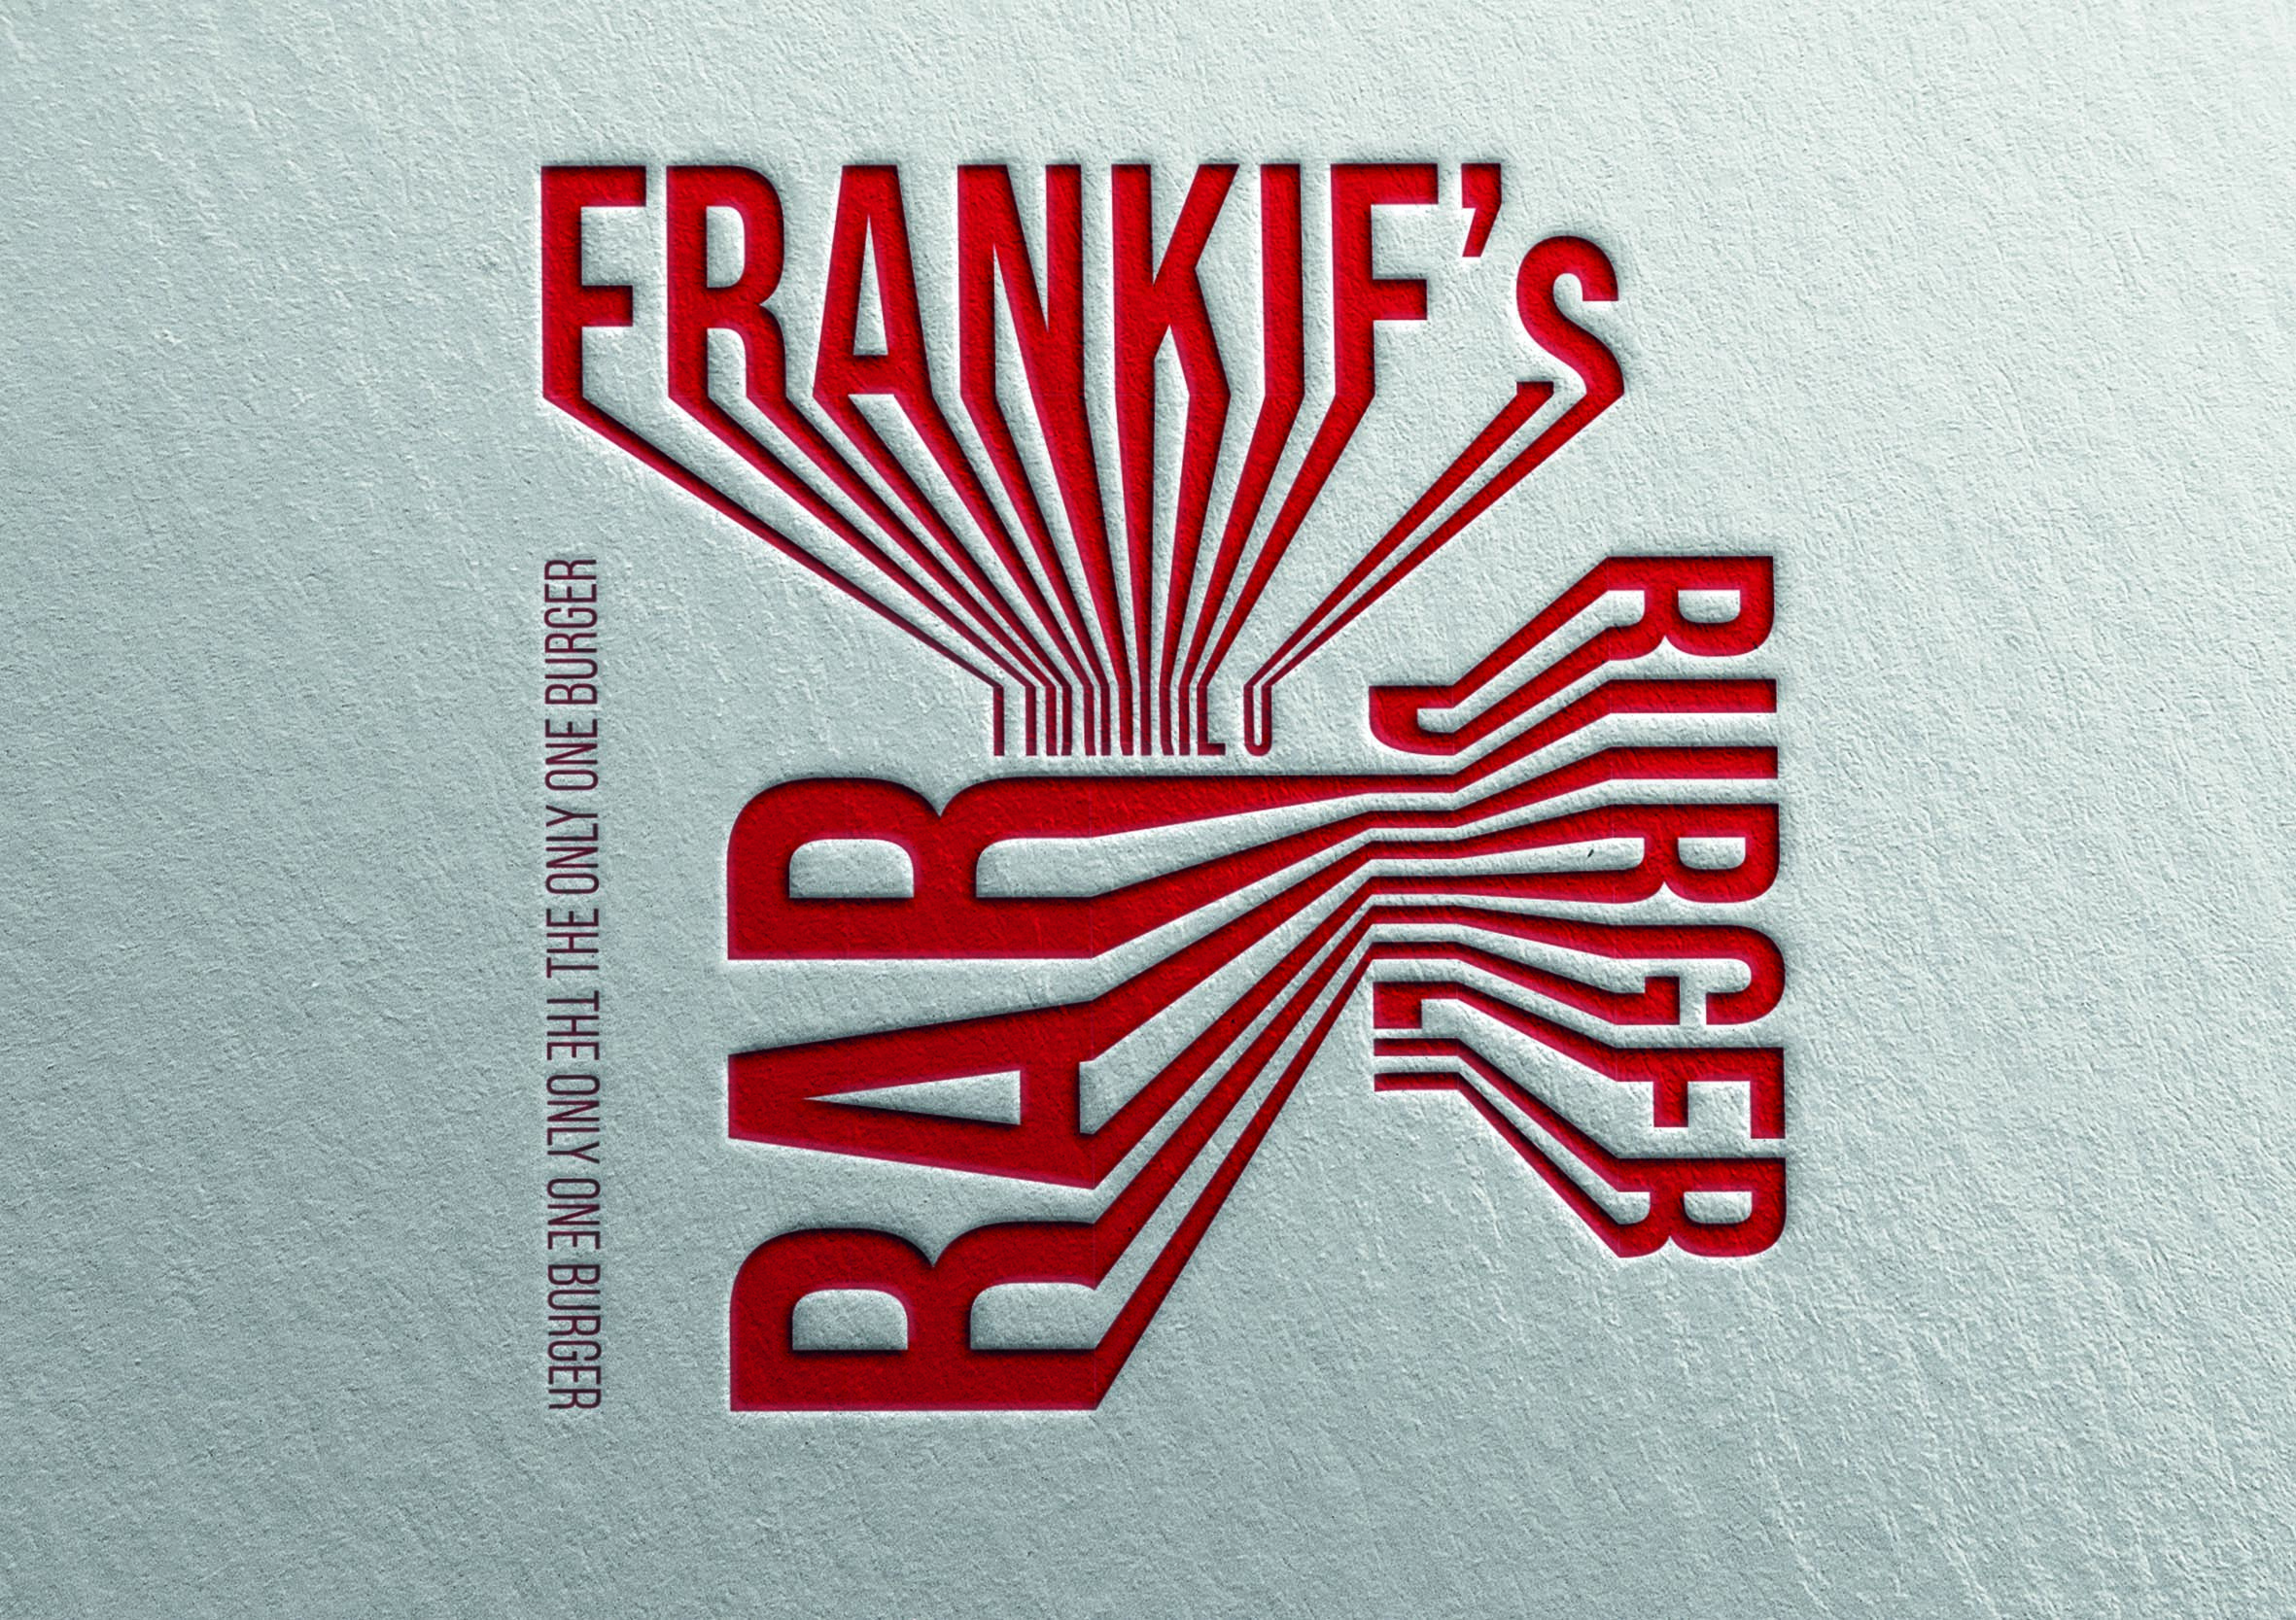 FRANKIE'S BURGER BAR by Creatias Estudio - Creative Work